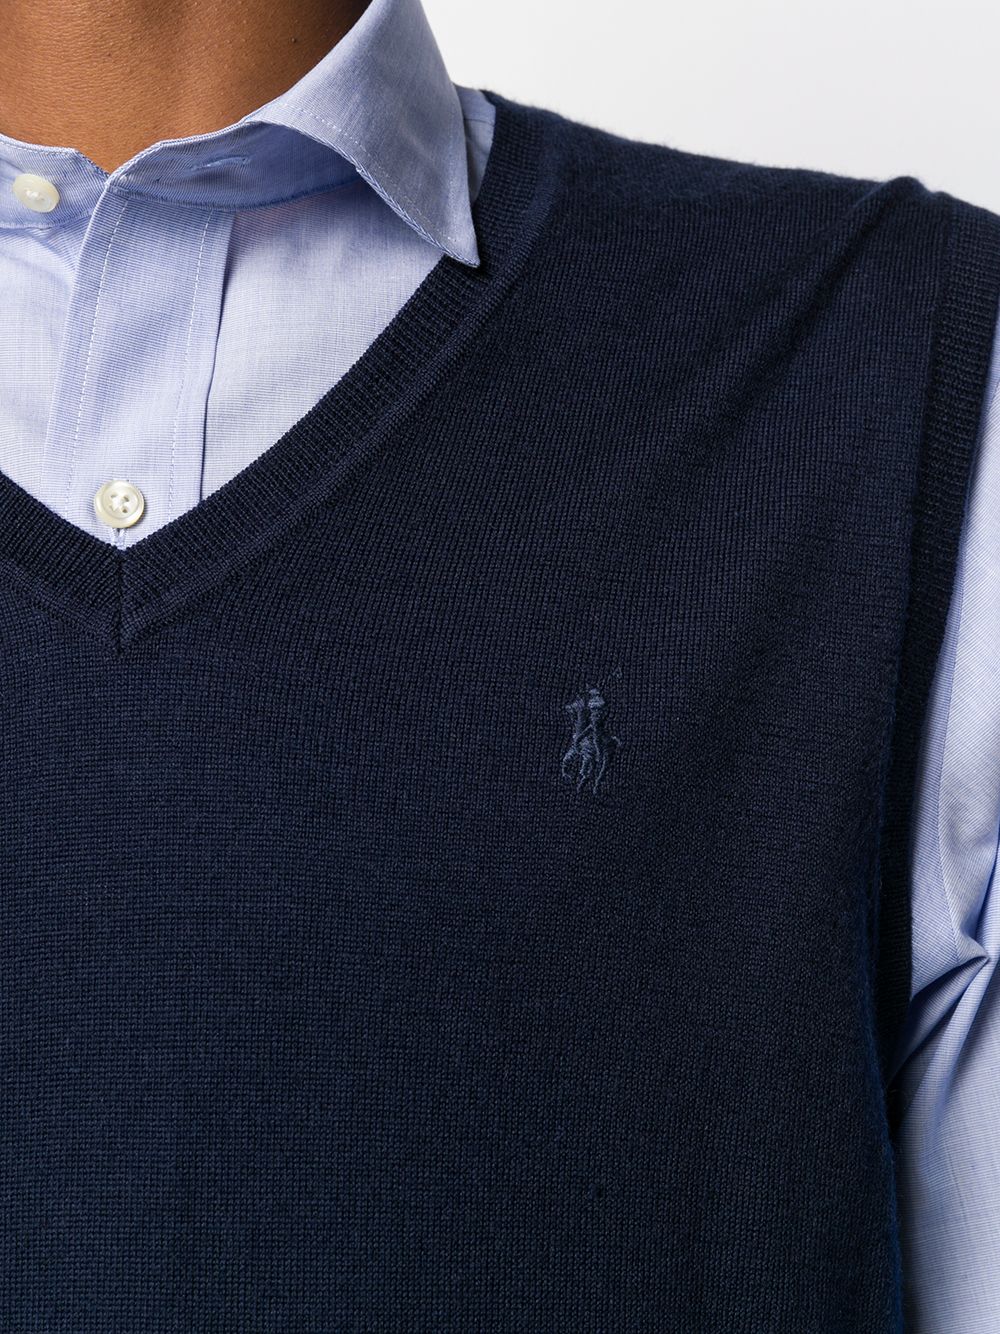 фото Polo ralph lauren свитер без рукавов и с вышитым логотипом